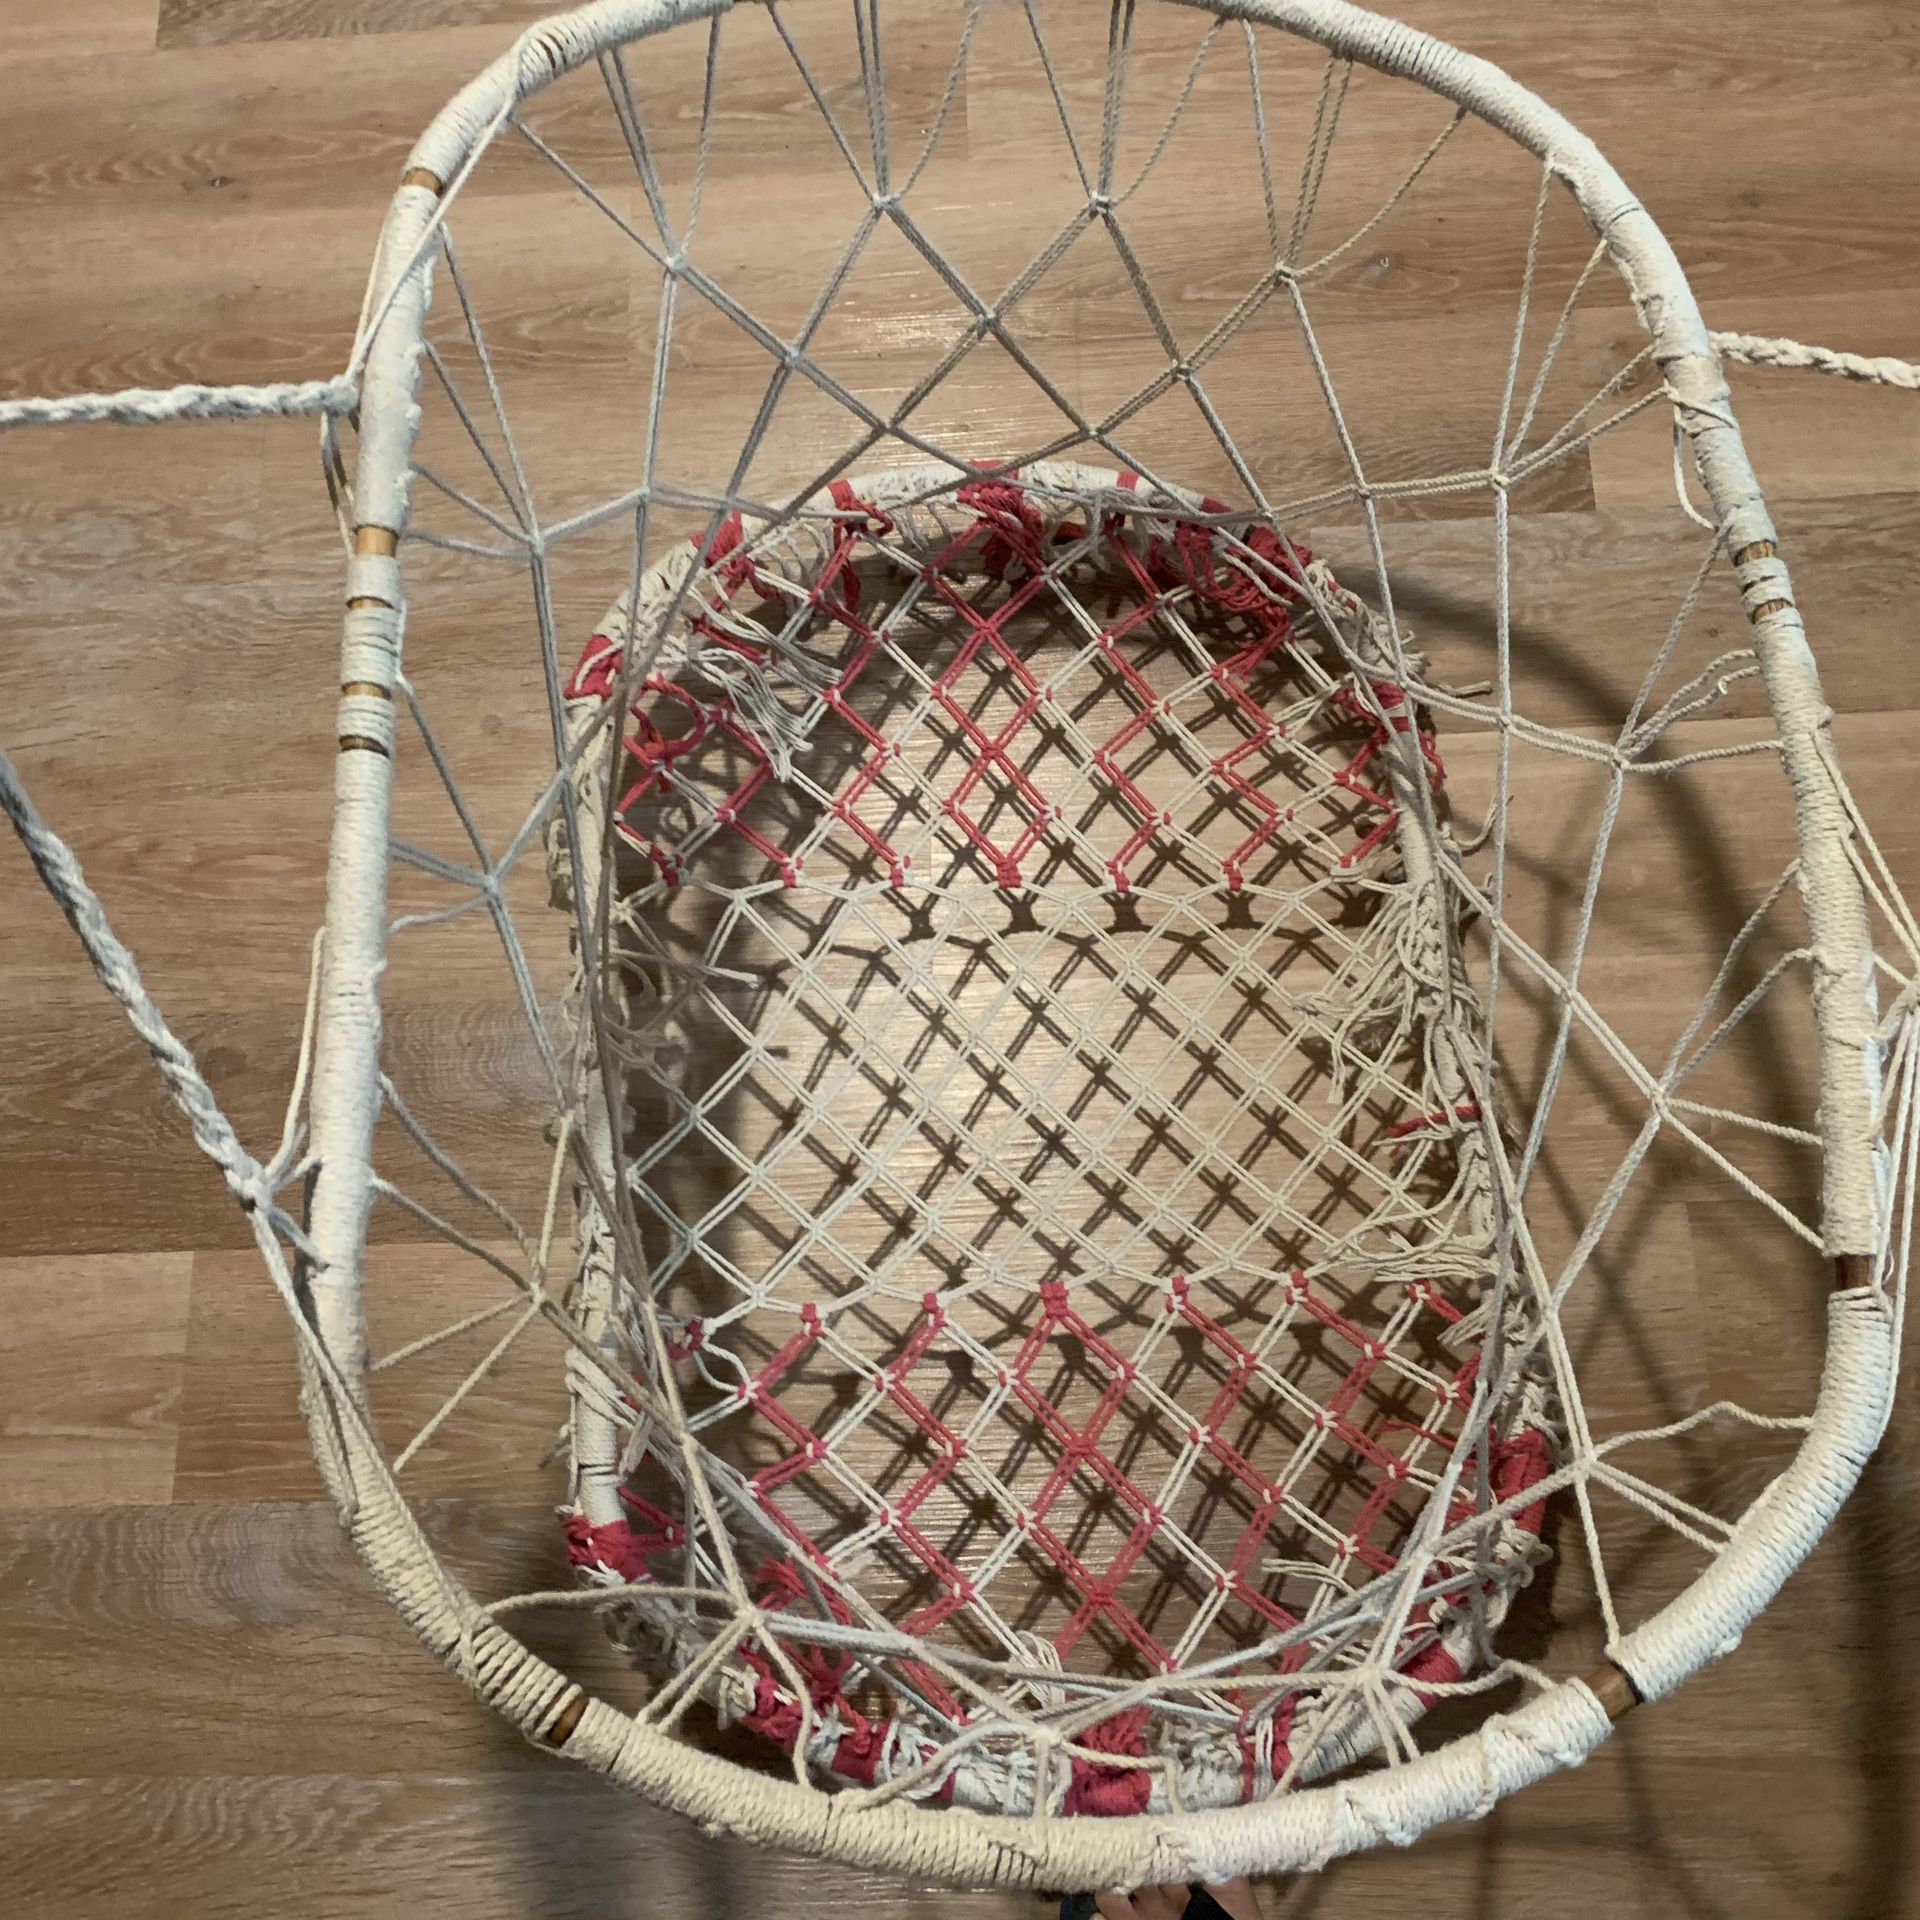 Baby Hanging Woven Basket Swing